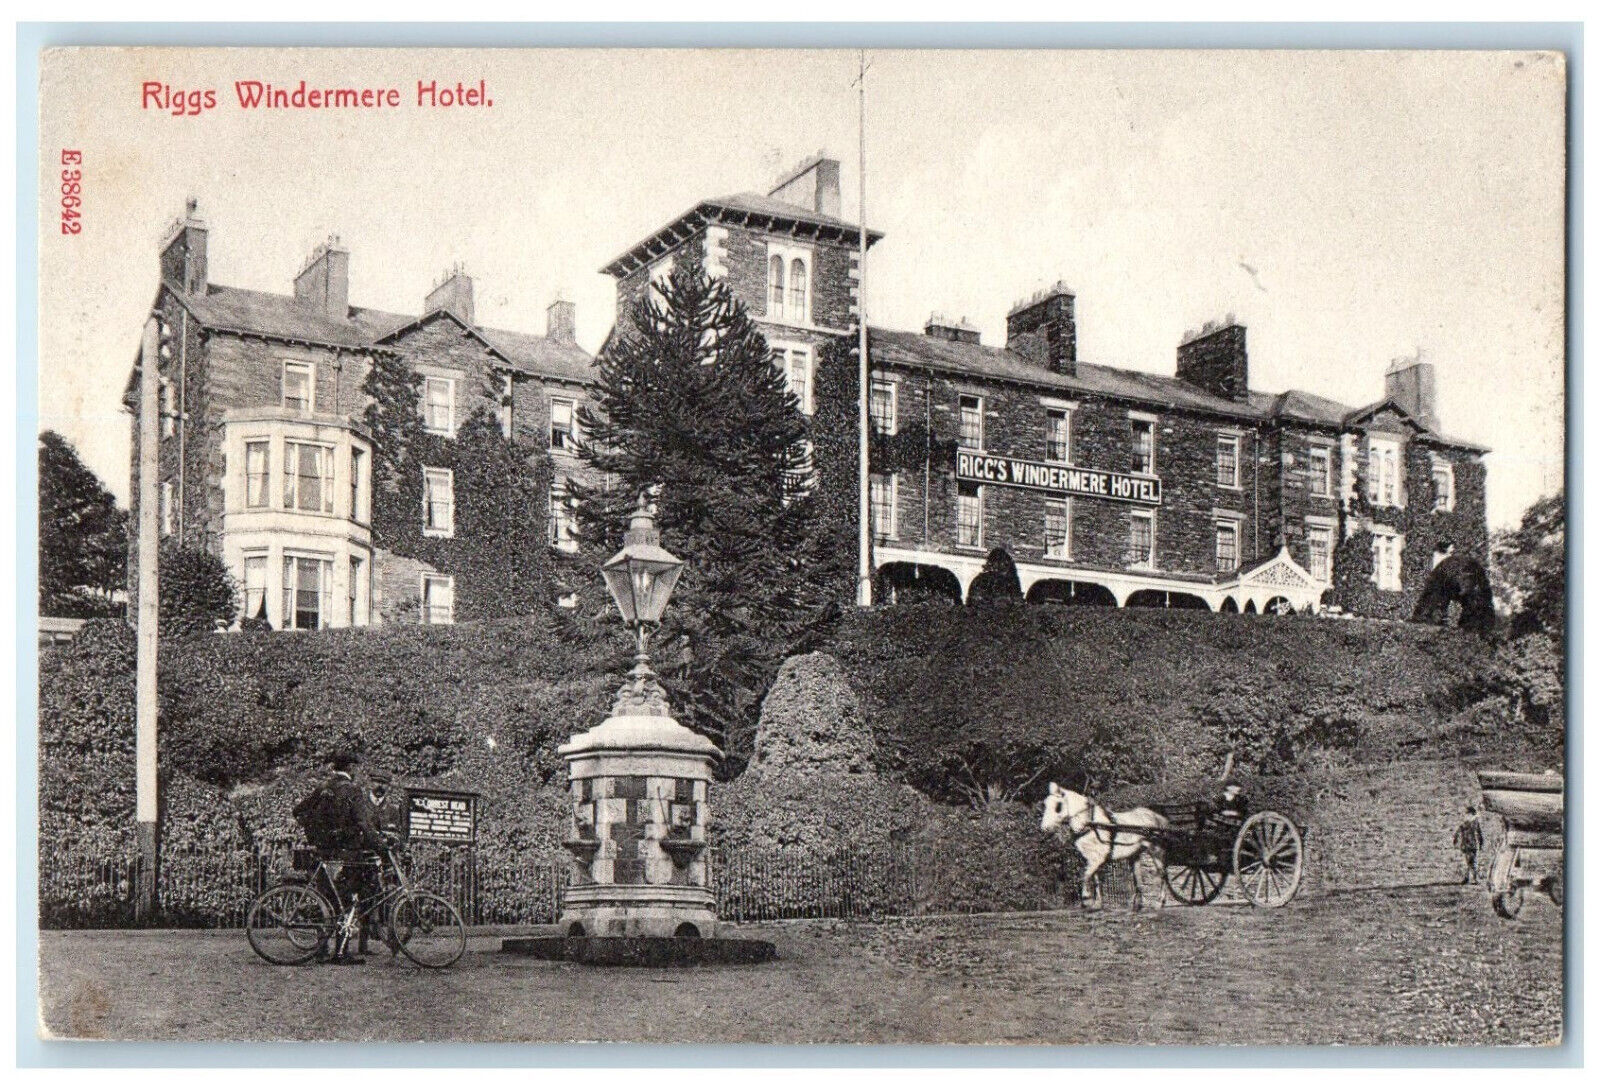 c1910 Riggs Windermere Hotel in Windermere Cumbria England Antique Postcard